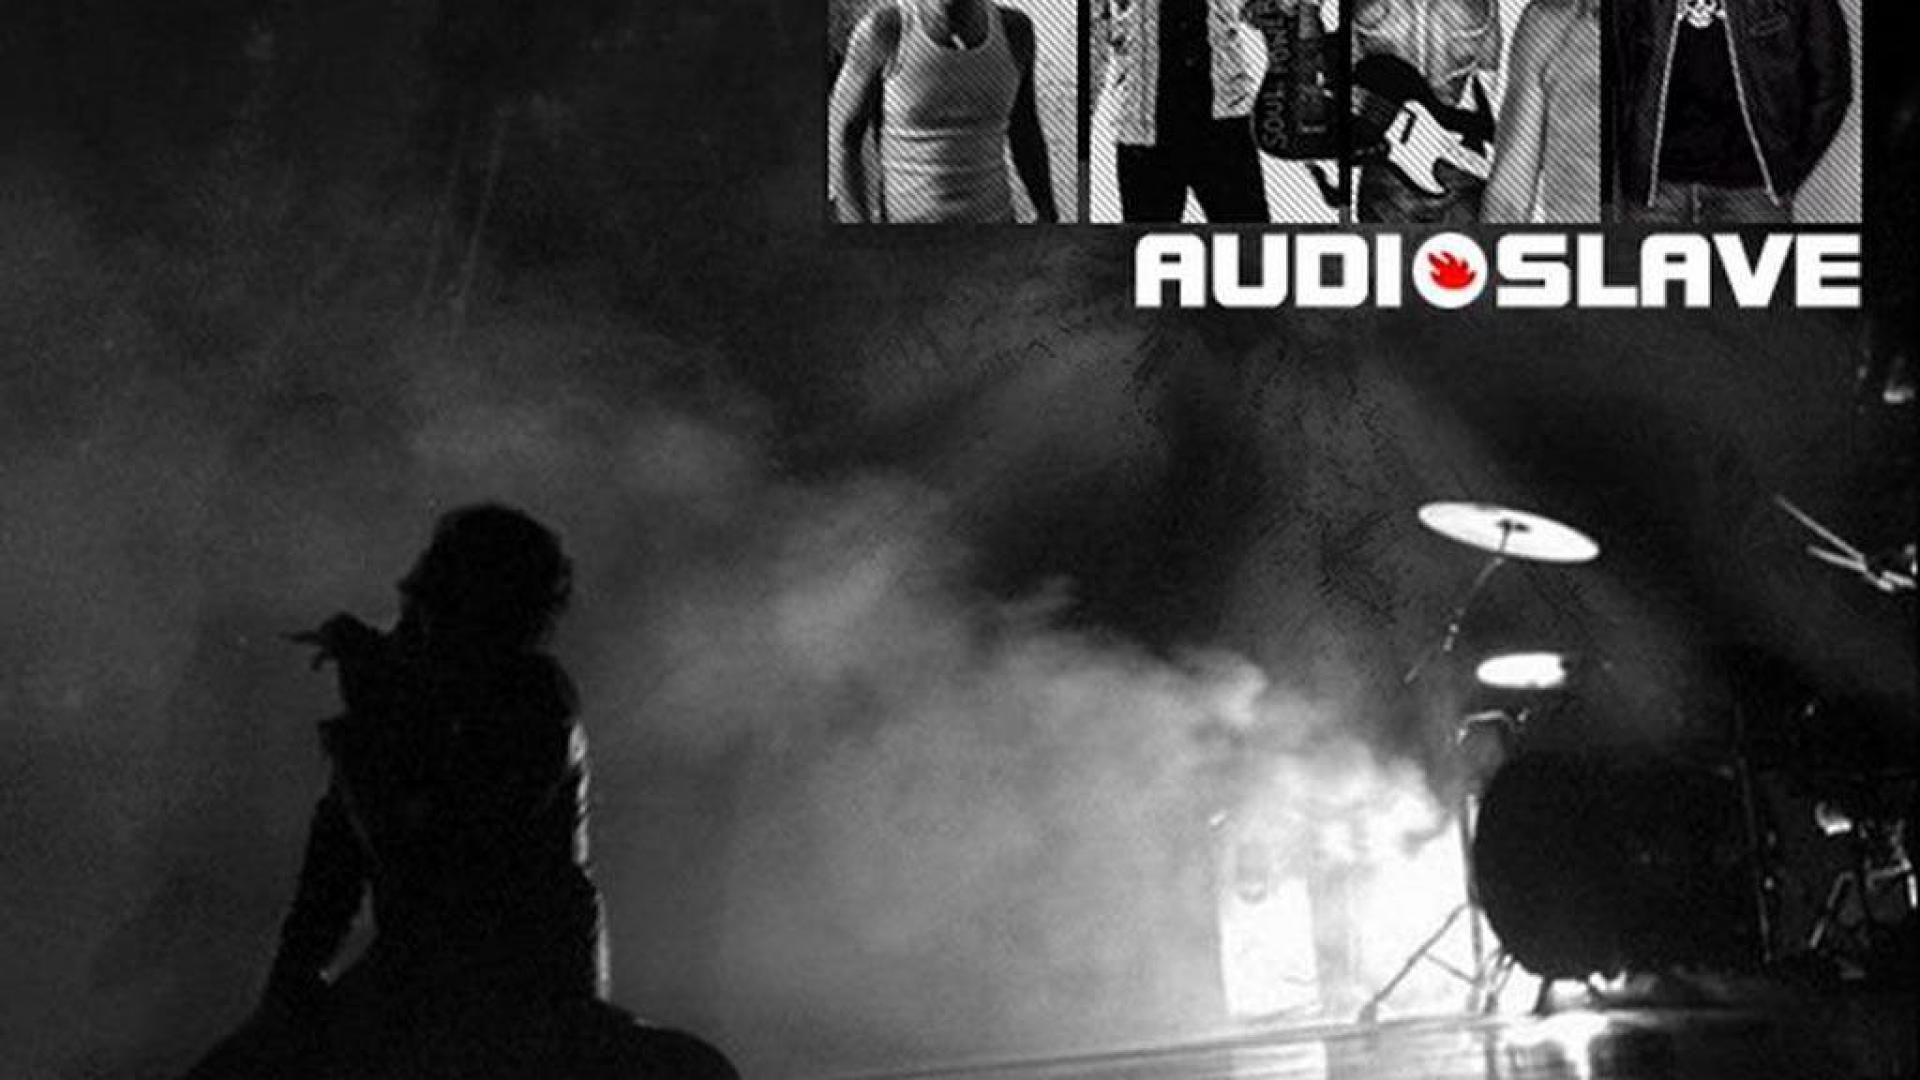 Audioslave Wallpaper, Audioslave Wallpaper for PC, HVGA 3: ZS